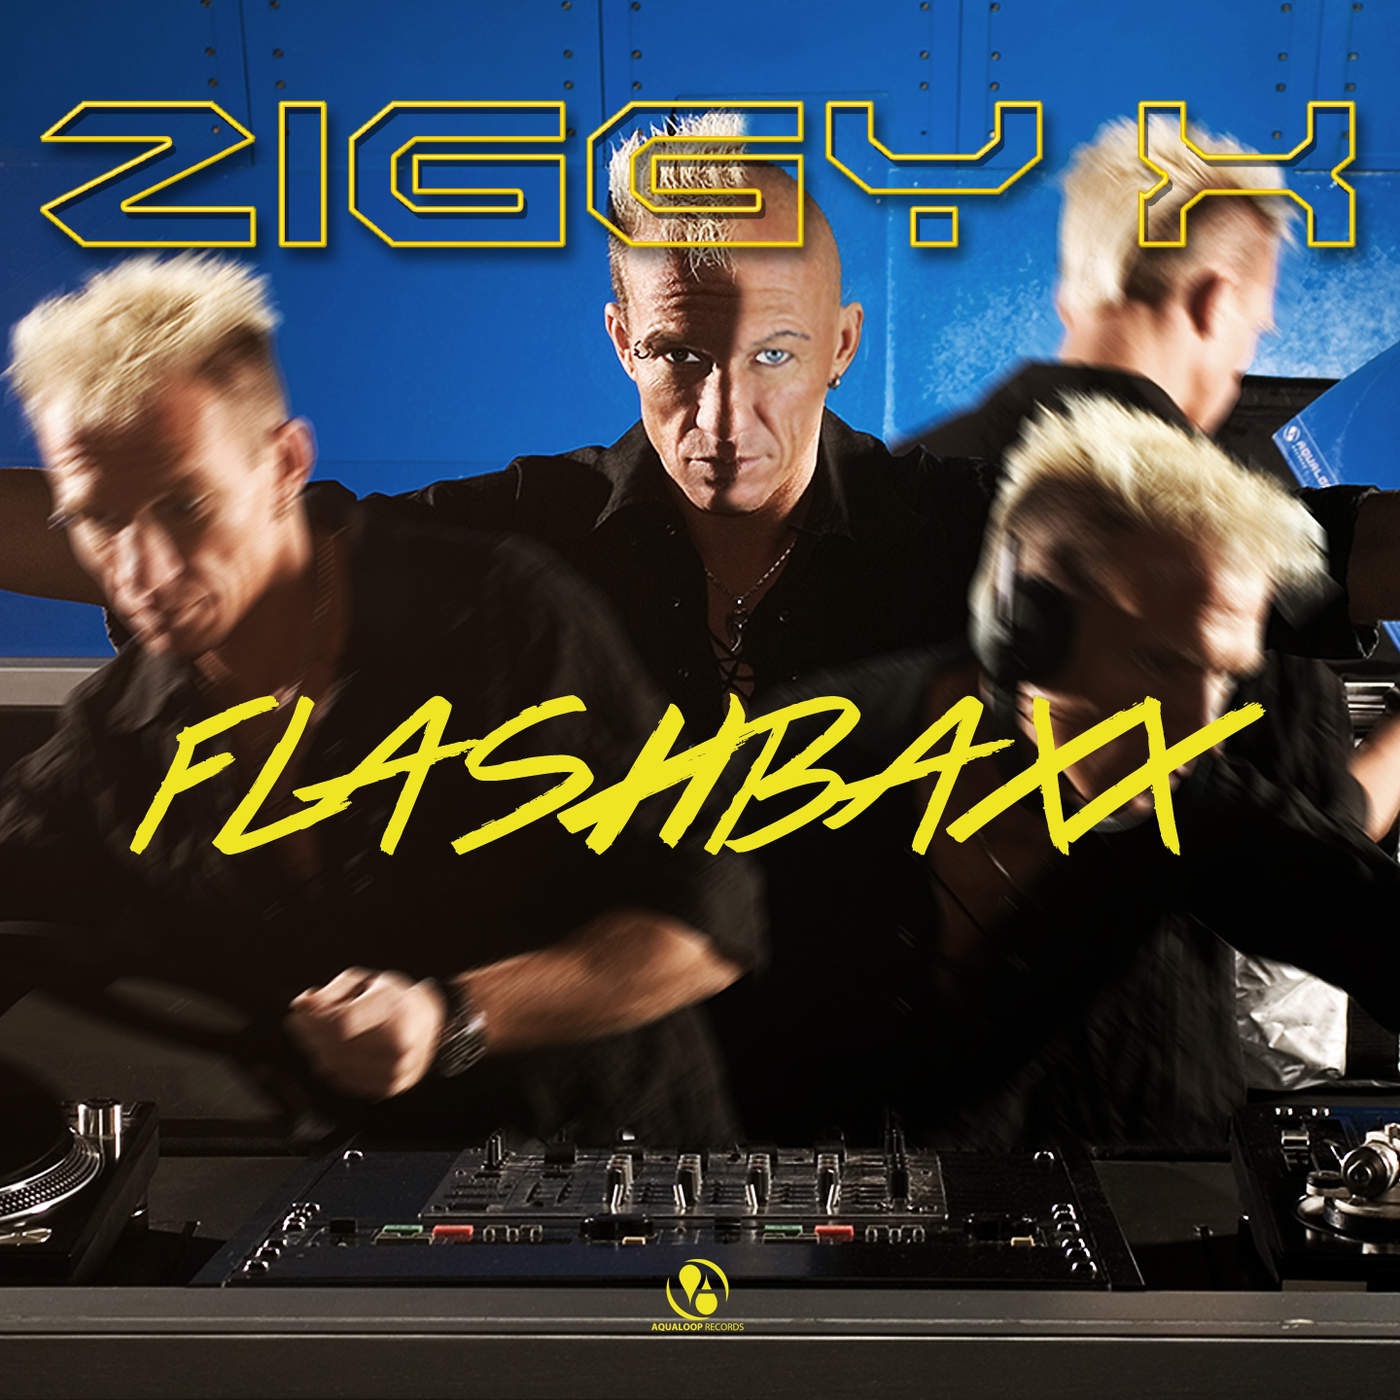 Flashbaxx